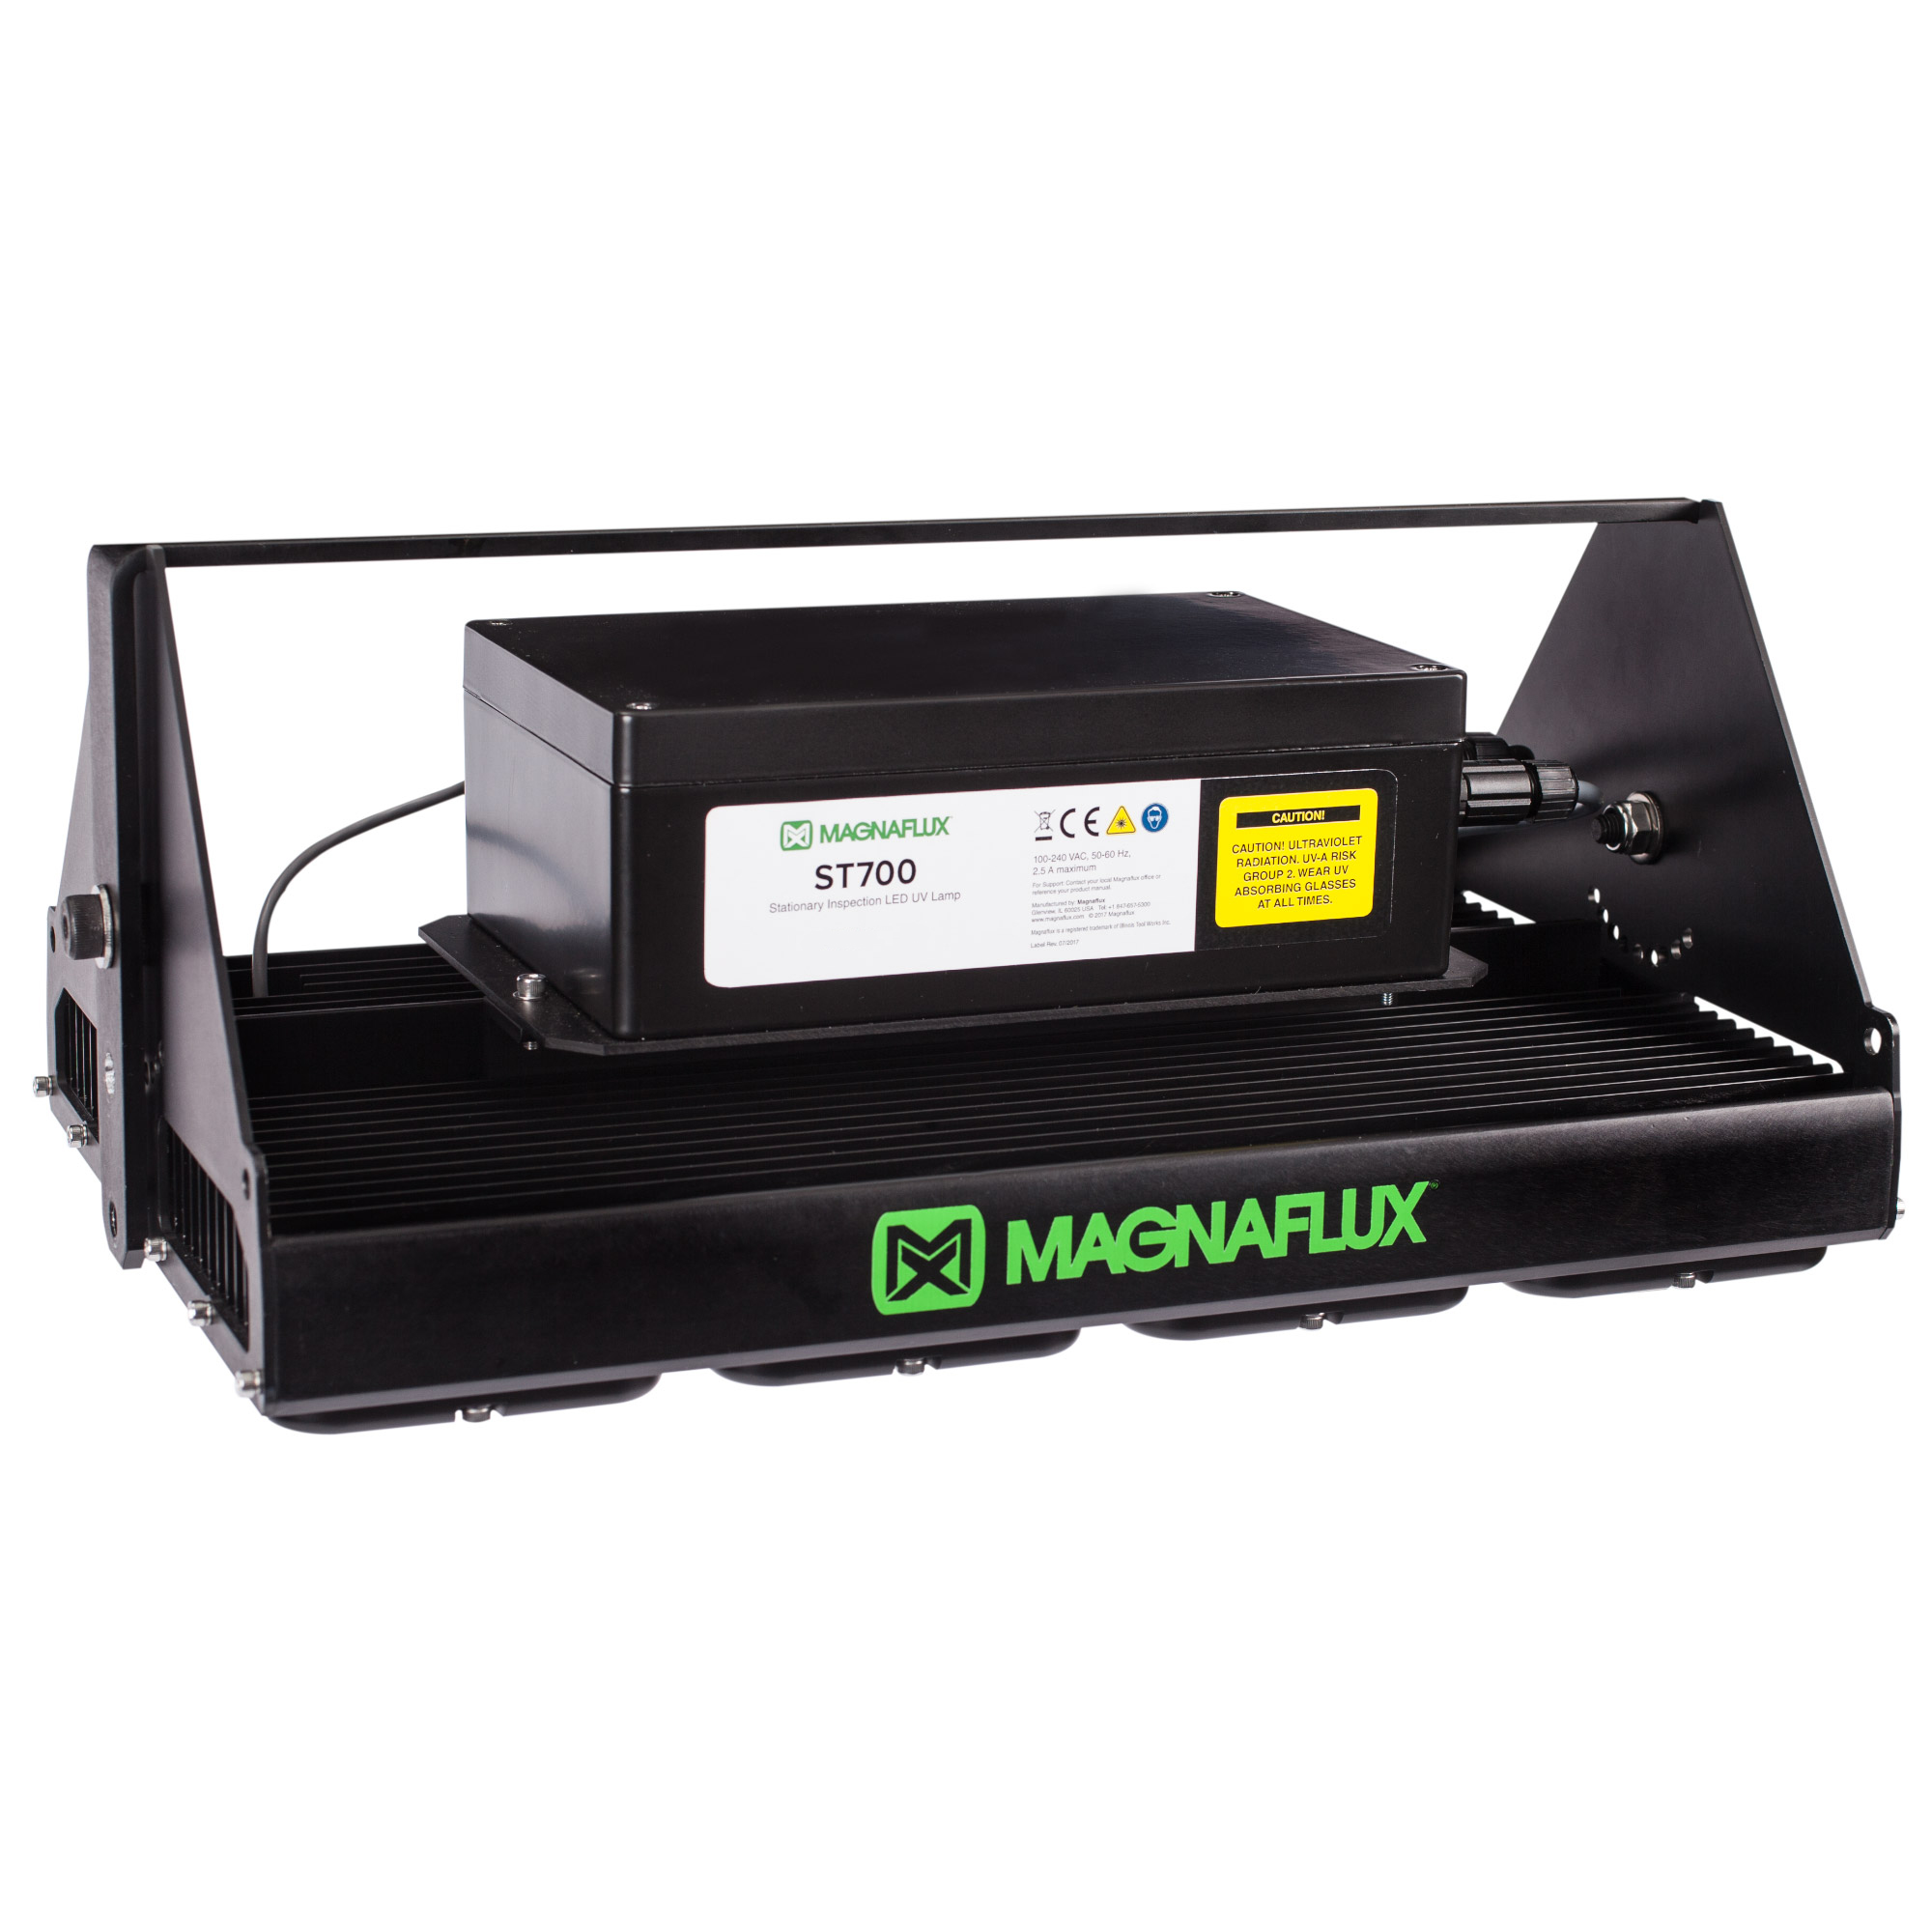 Magnaflux ST700 Stationary Inspection LED UV Lamp for Fluorescent NDT